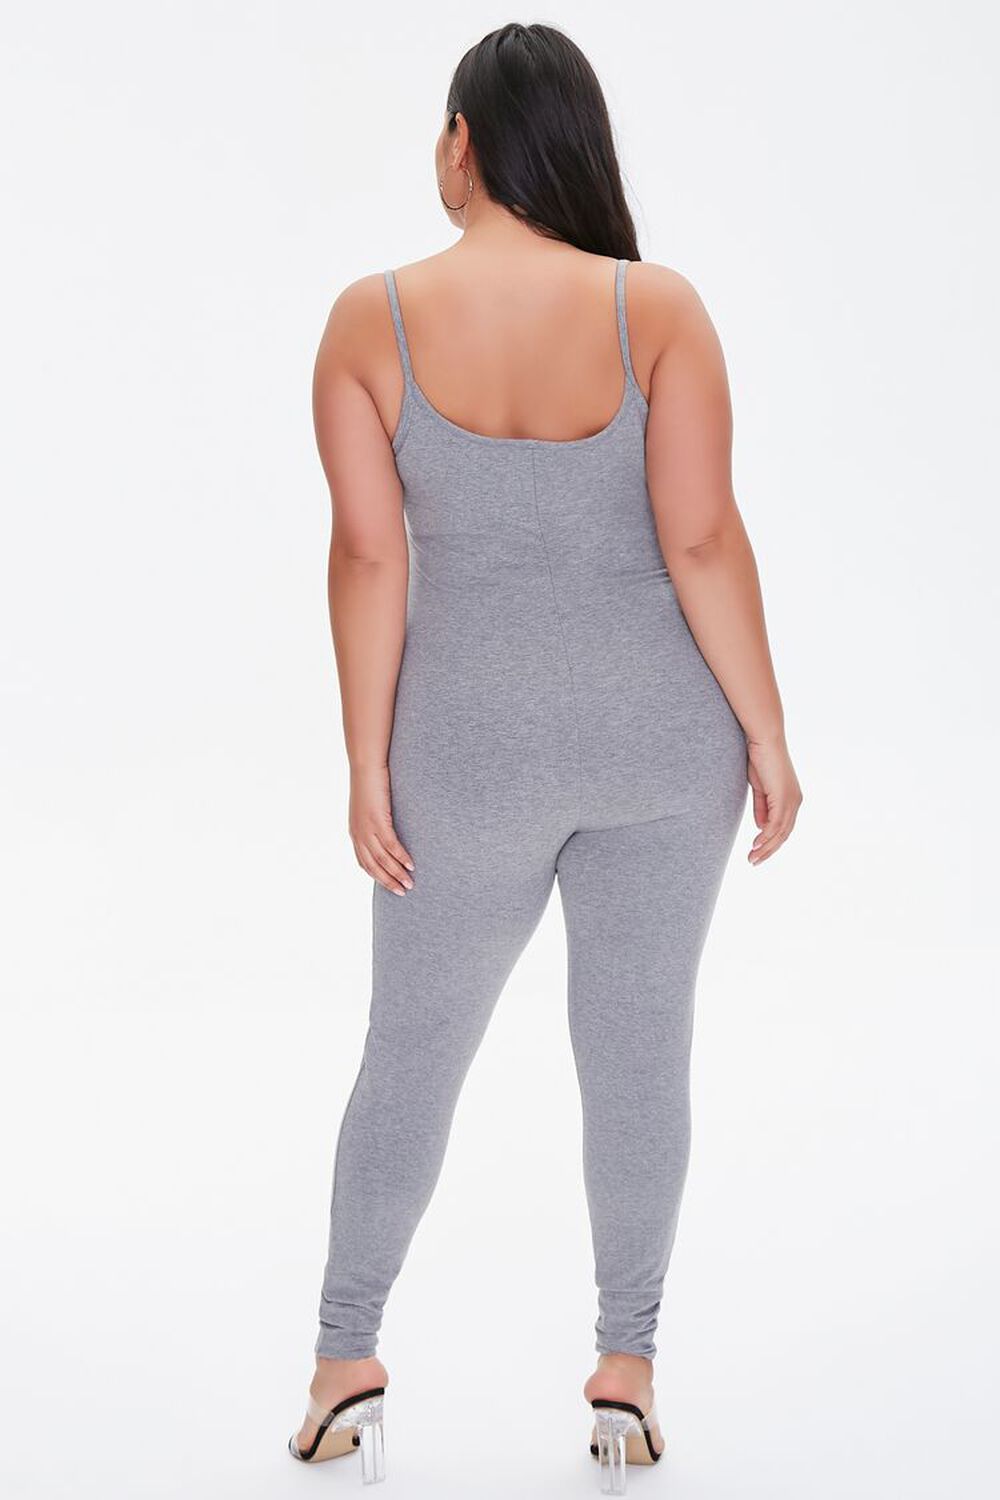 HEATHER GREY Plus Size Cami Jumpsuit, image 3